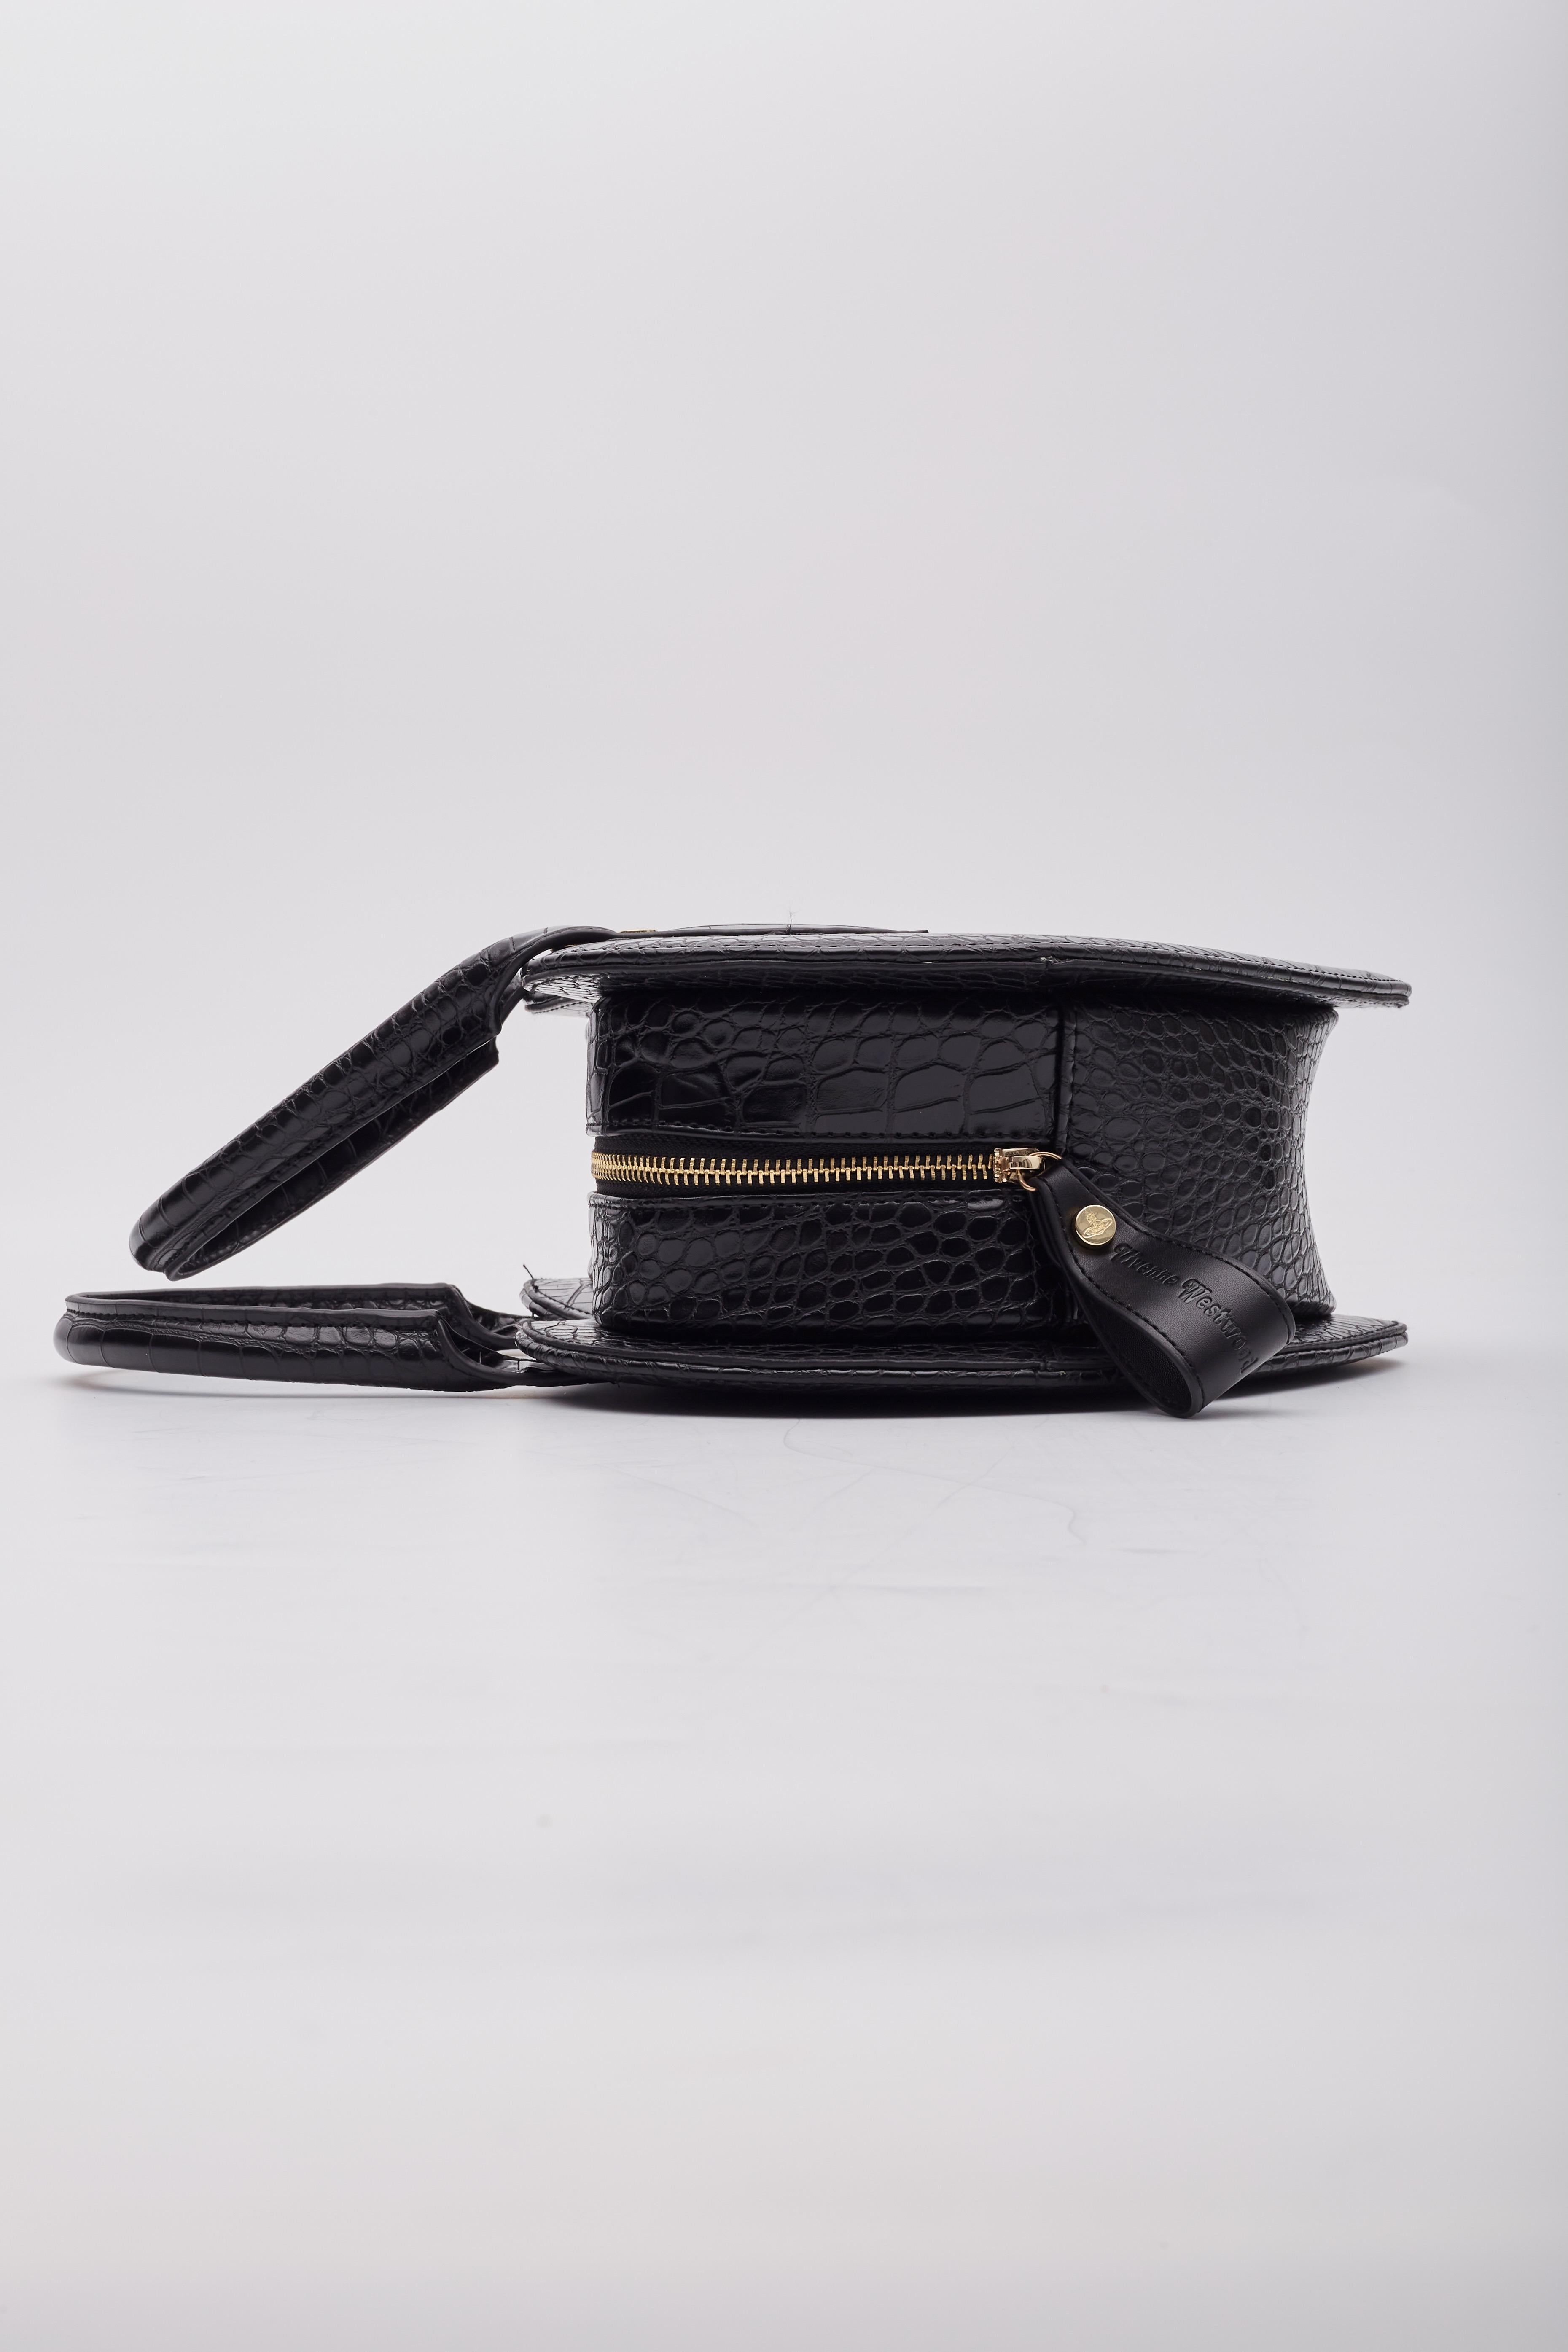 Vivienne Westwood Black Croc Embossed Chancery Heart Handbag For Sale 1